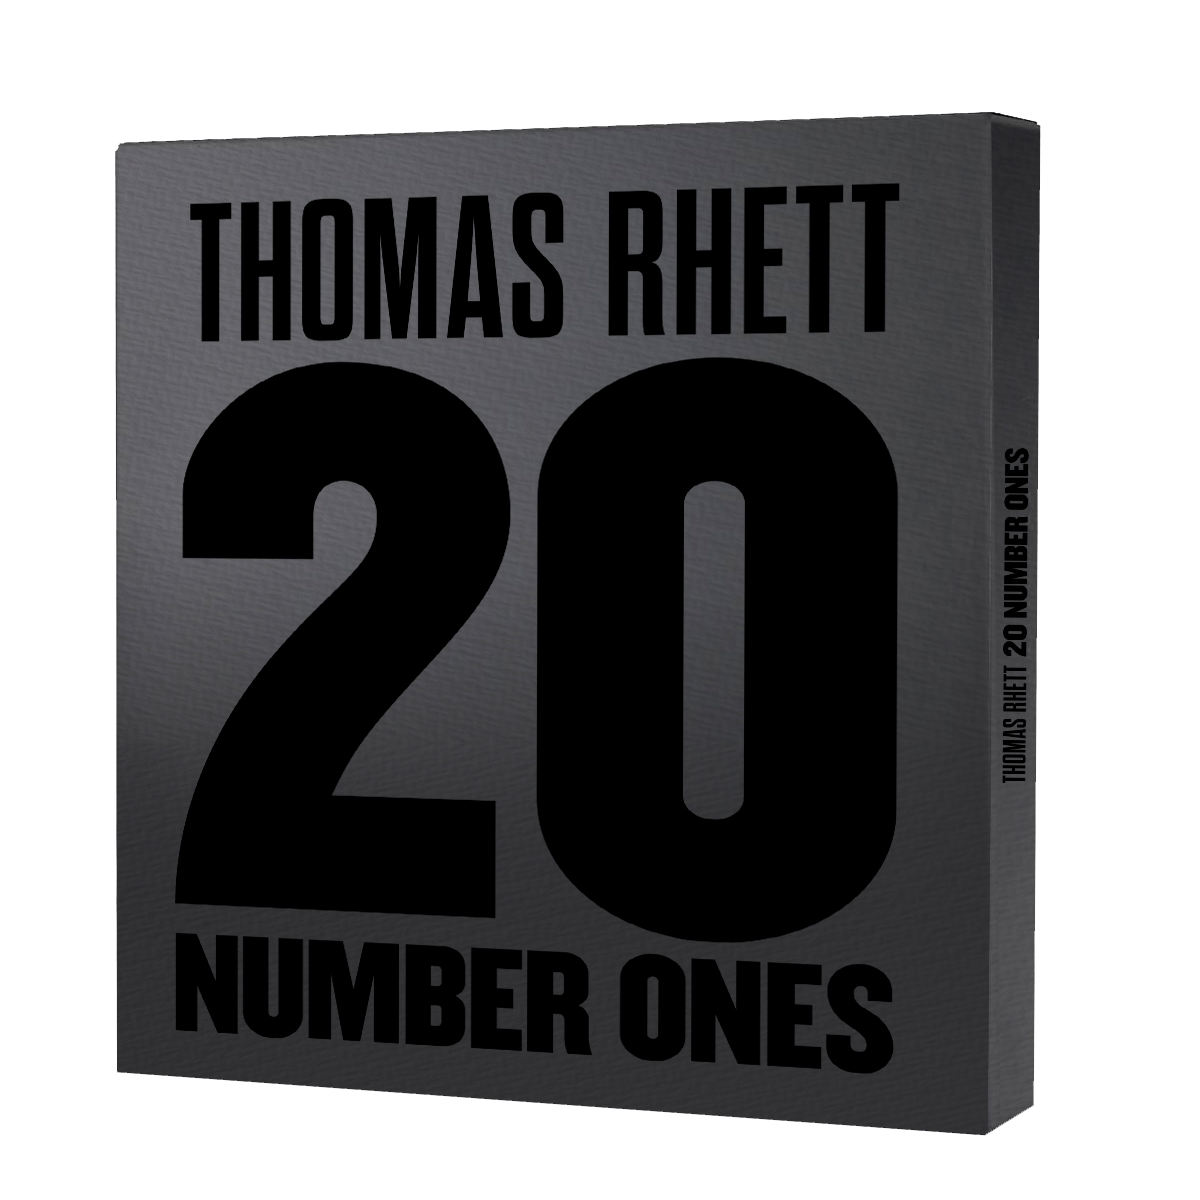 20 Number Ones Vinyl Box Set